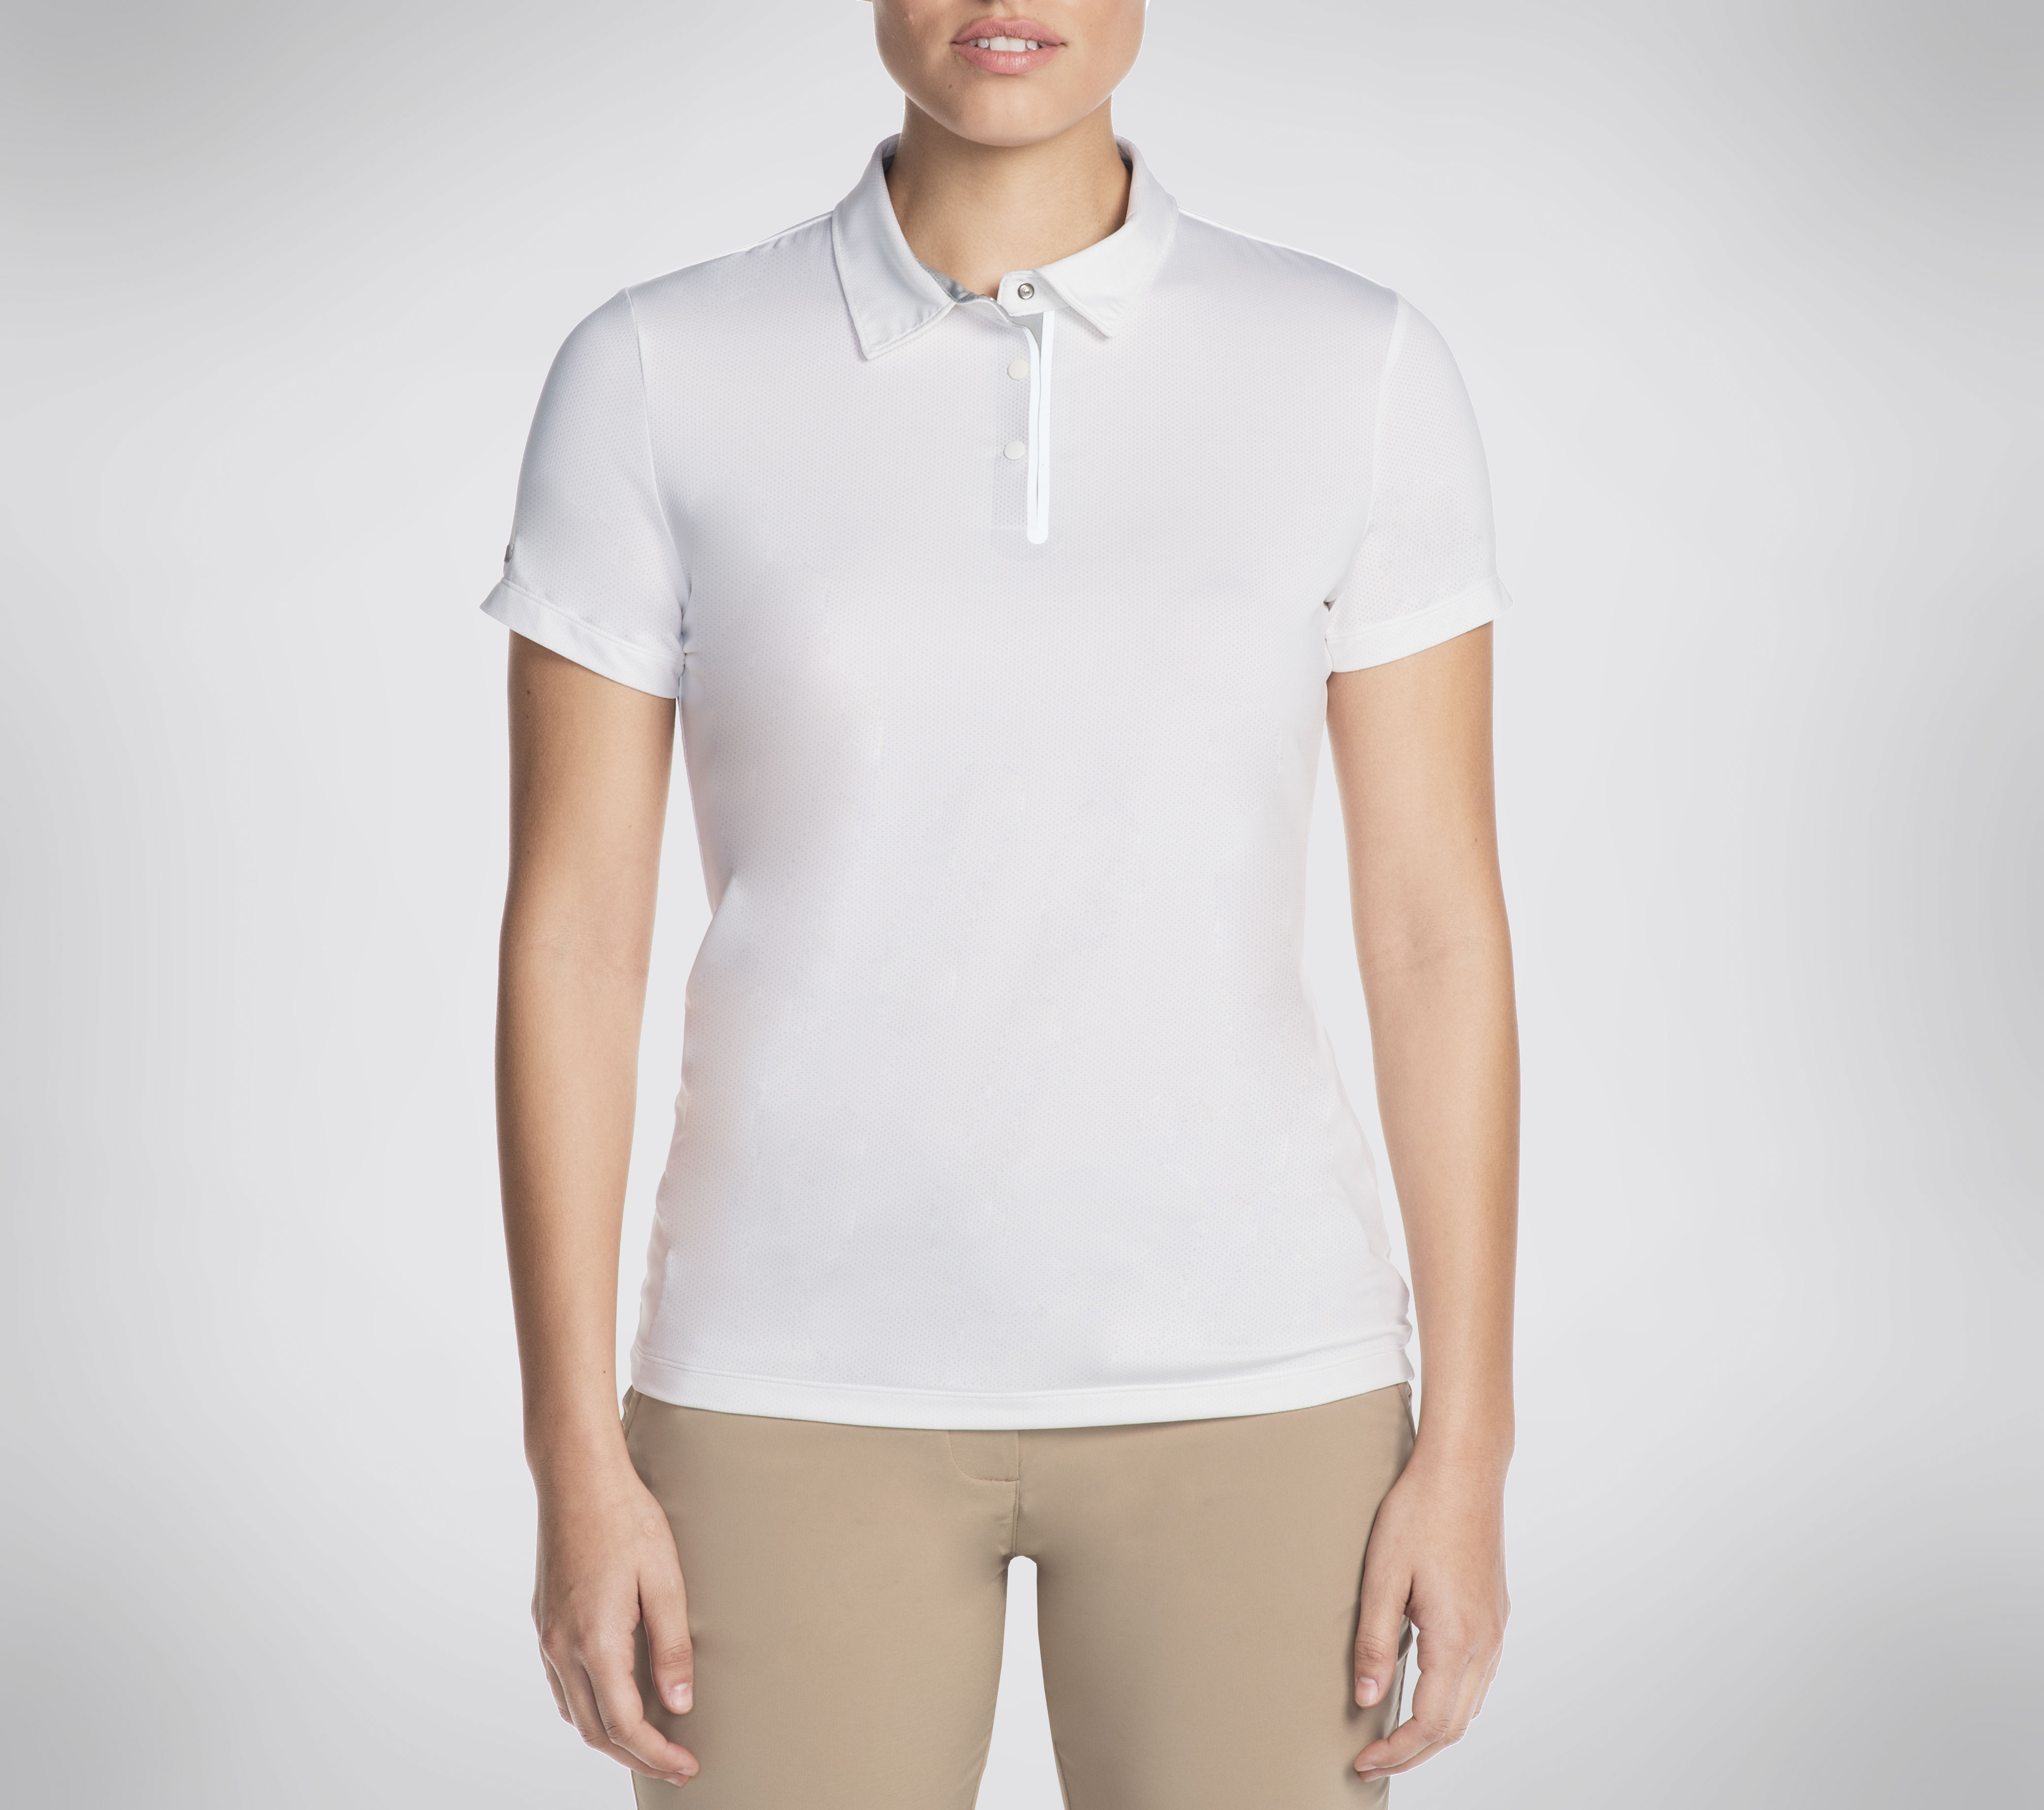 skechers polo shirt white OFF 68%